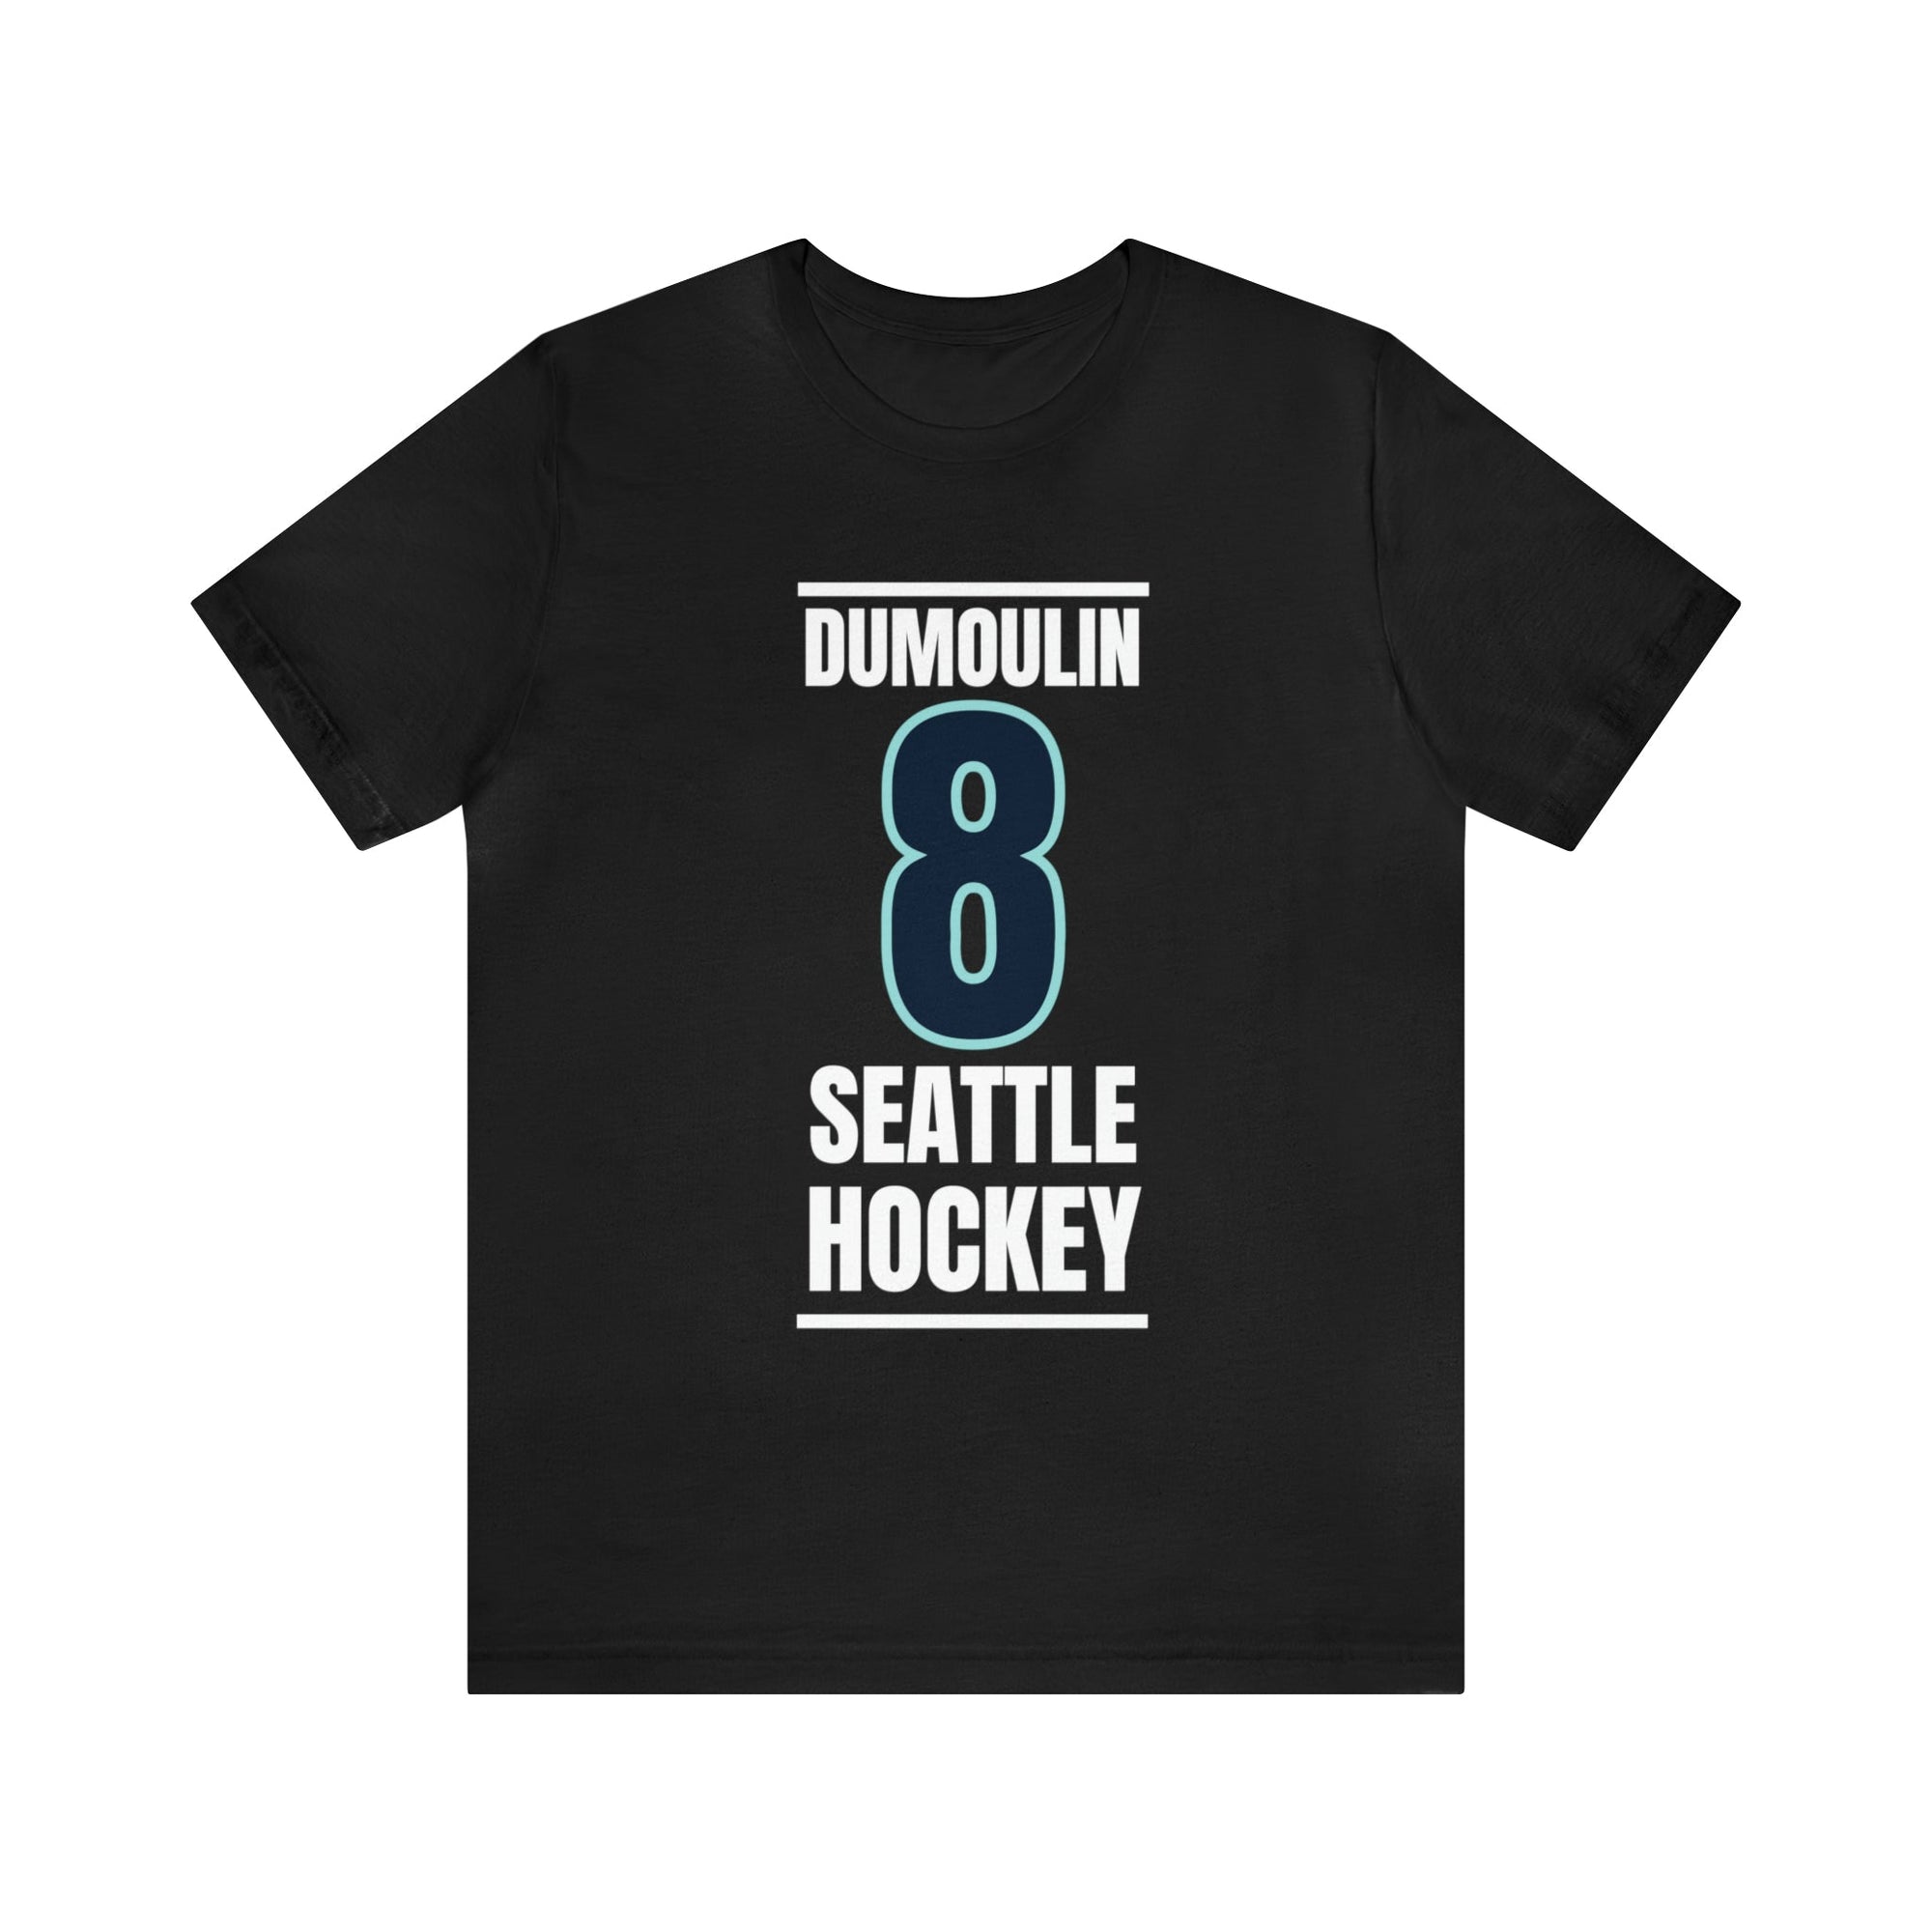 T-Shirt Dumoulin 8 Seattle Hockey Black Vertical Design Unisex T-Shirt